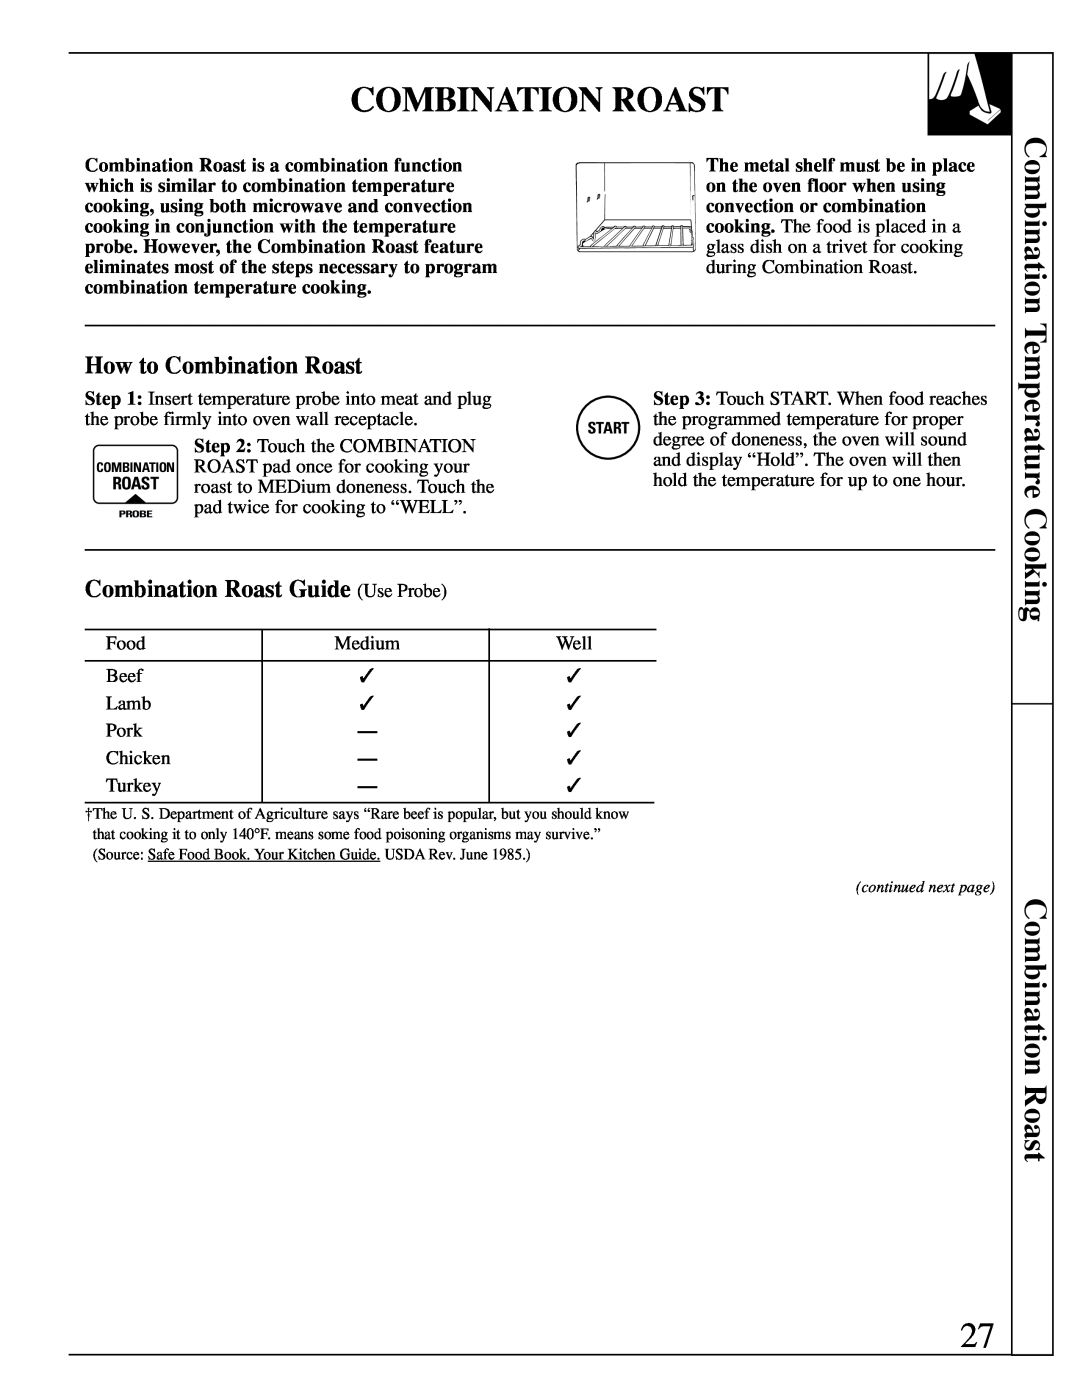 GE JEB1095 warranty Temperature Cooking Combination Roast, How to Combination Roast, Combination Roast Guide Use Probe 